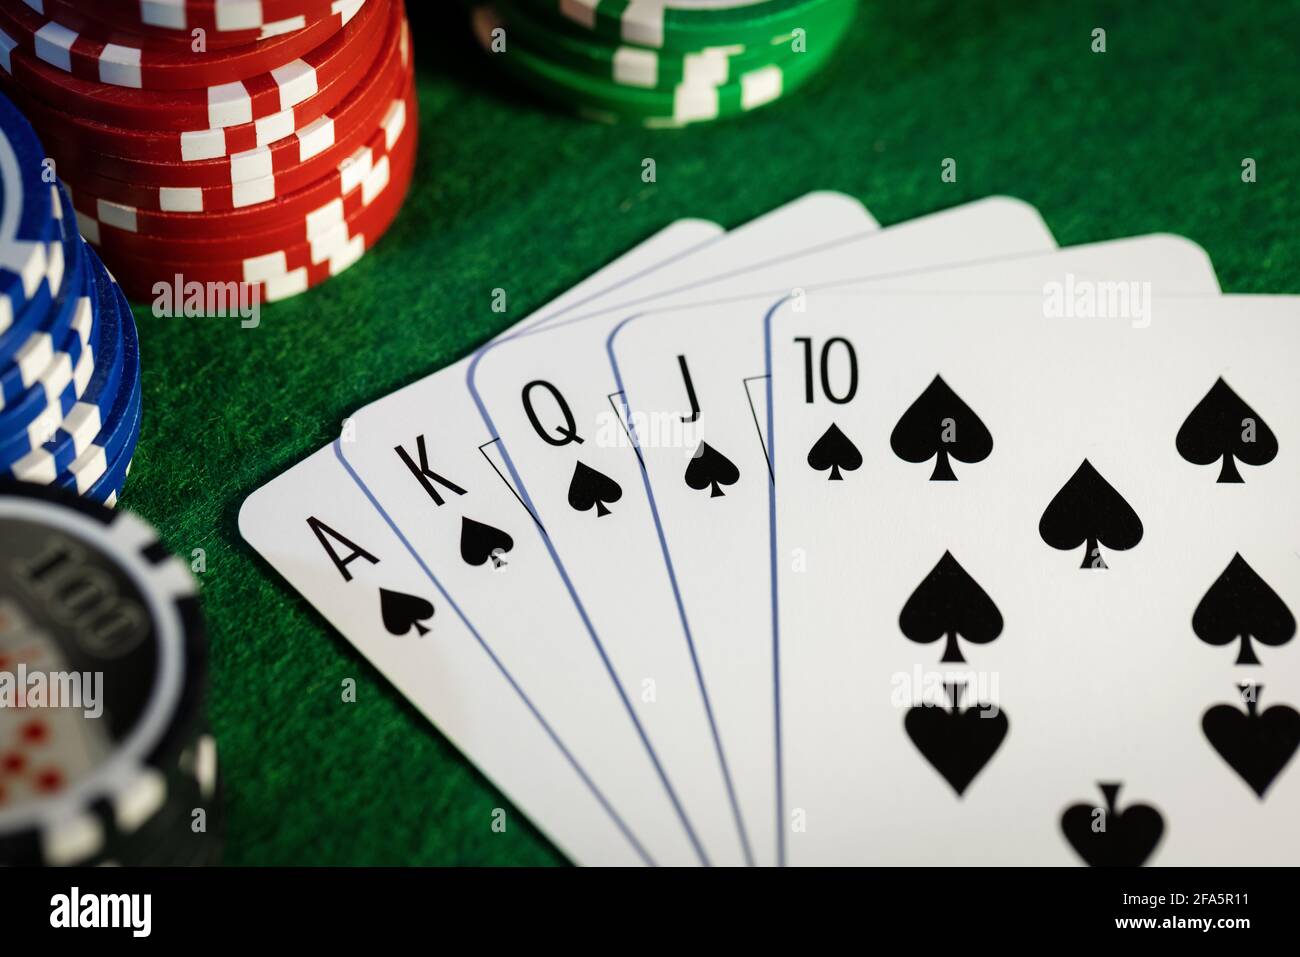 royal Flush im Pokerspiel. Karten mit Casino-Chips auf grünem Tuch Stockfoto